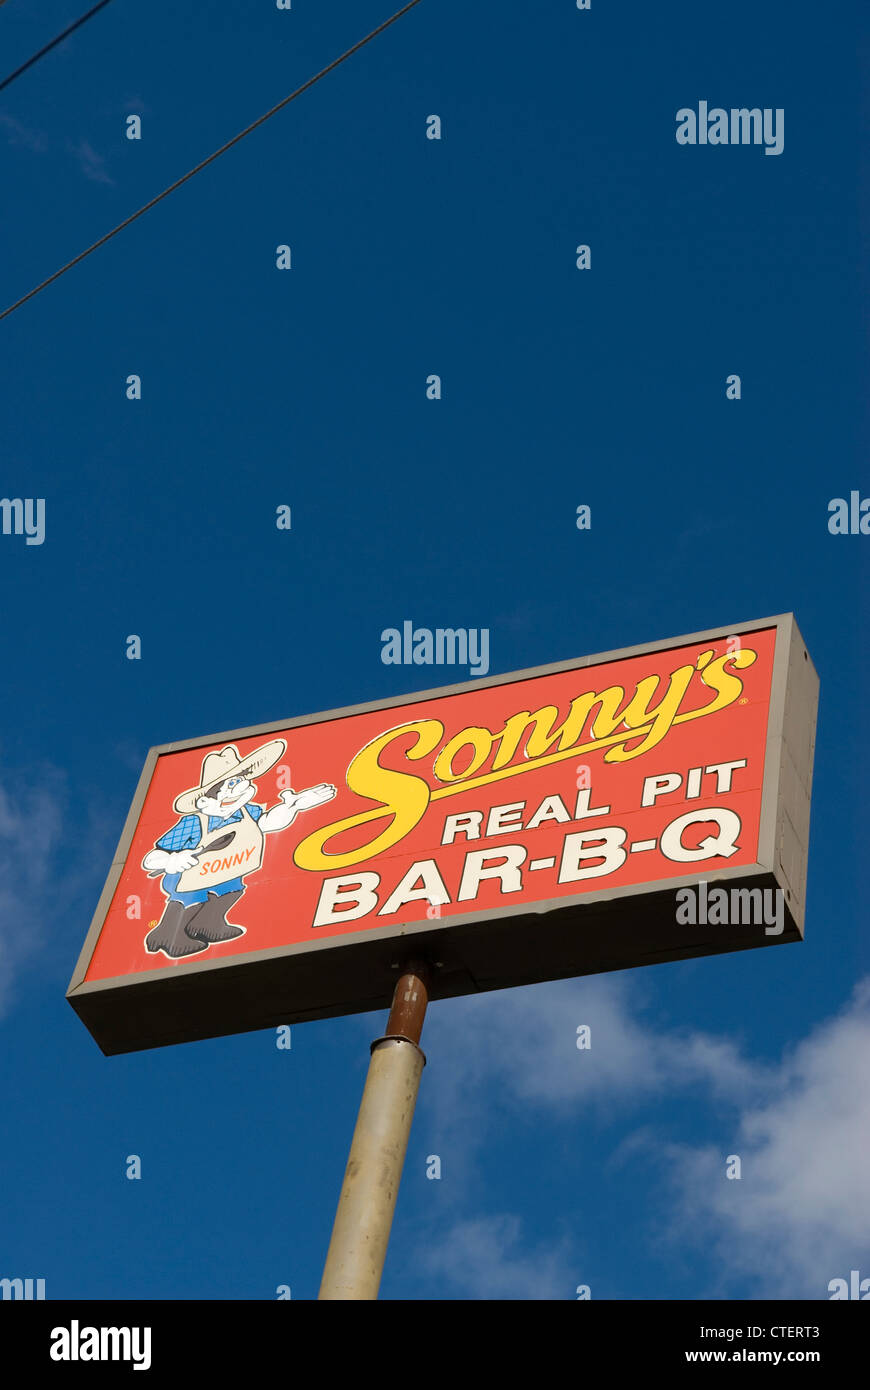 Sonny's Real Pit Bar-B-Q Restaurant Sign USA Stock Photo - Alamy